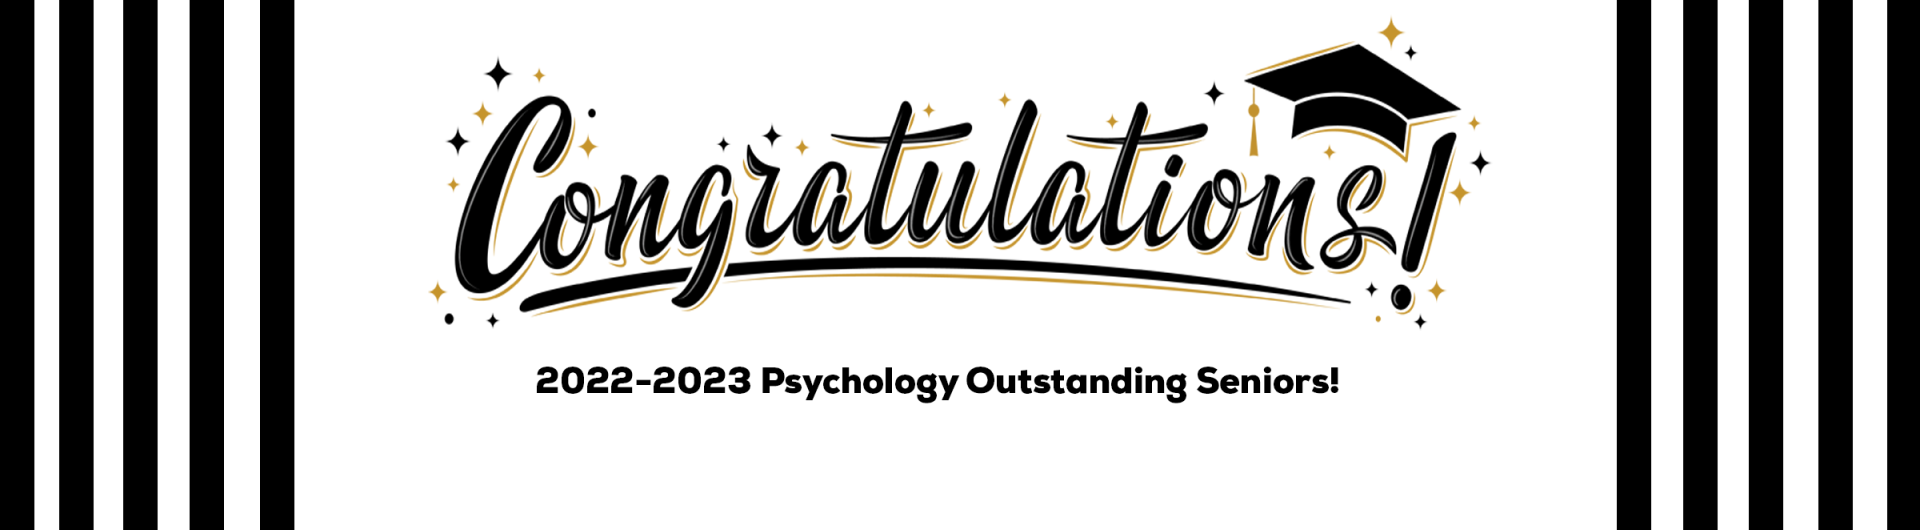 2022-2023 Psychology Outstanding Seniors!